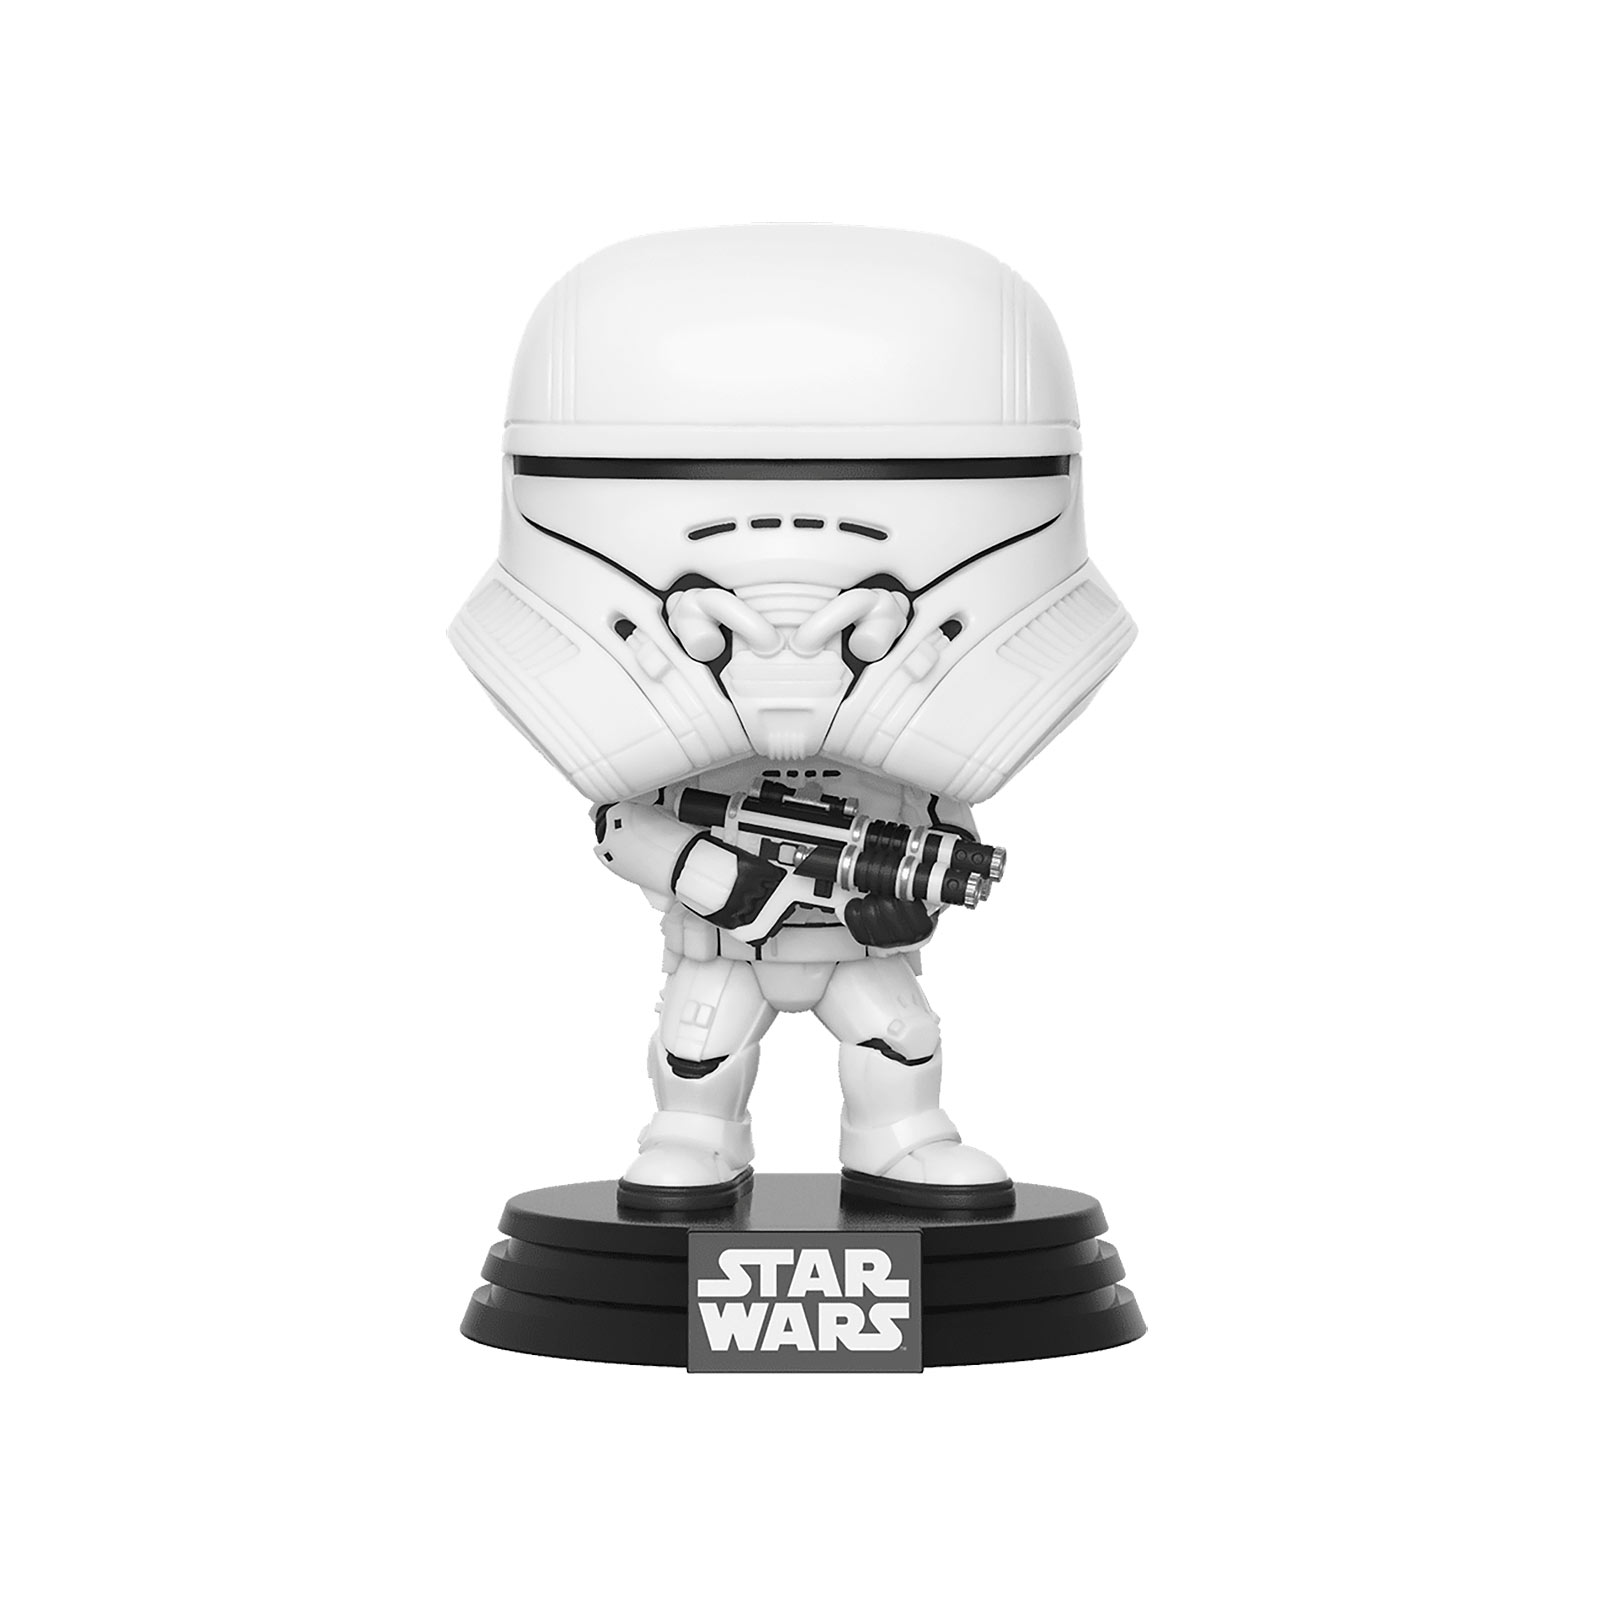 Star Wars - First Order Jet Trooper Funko Pop figurine à tête branlante